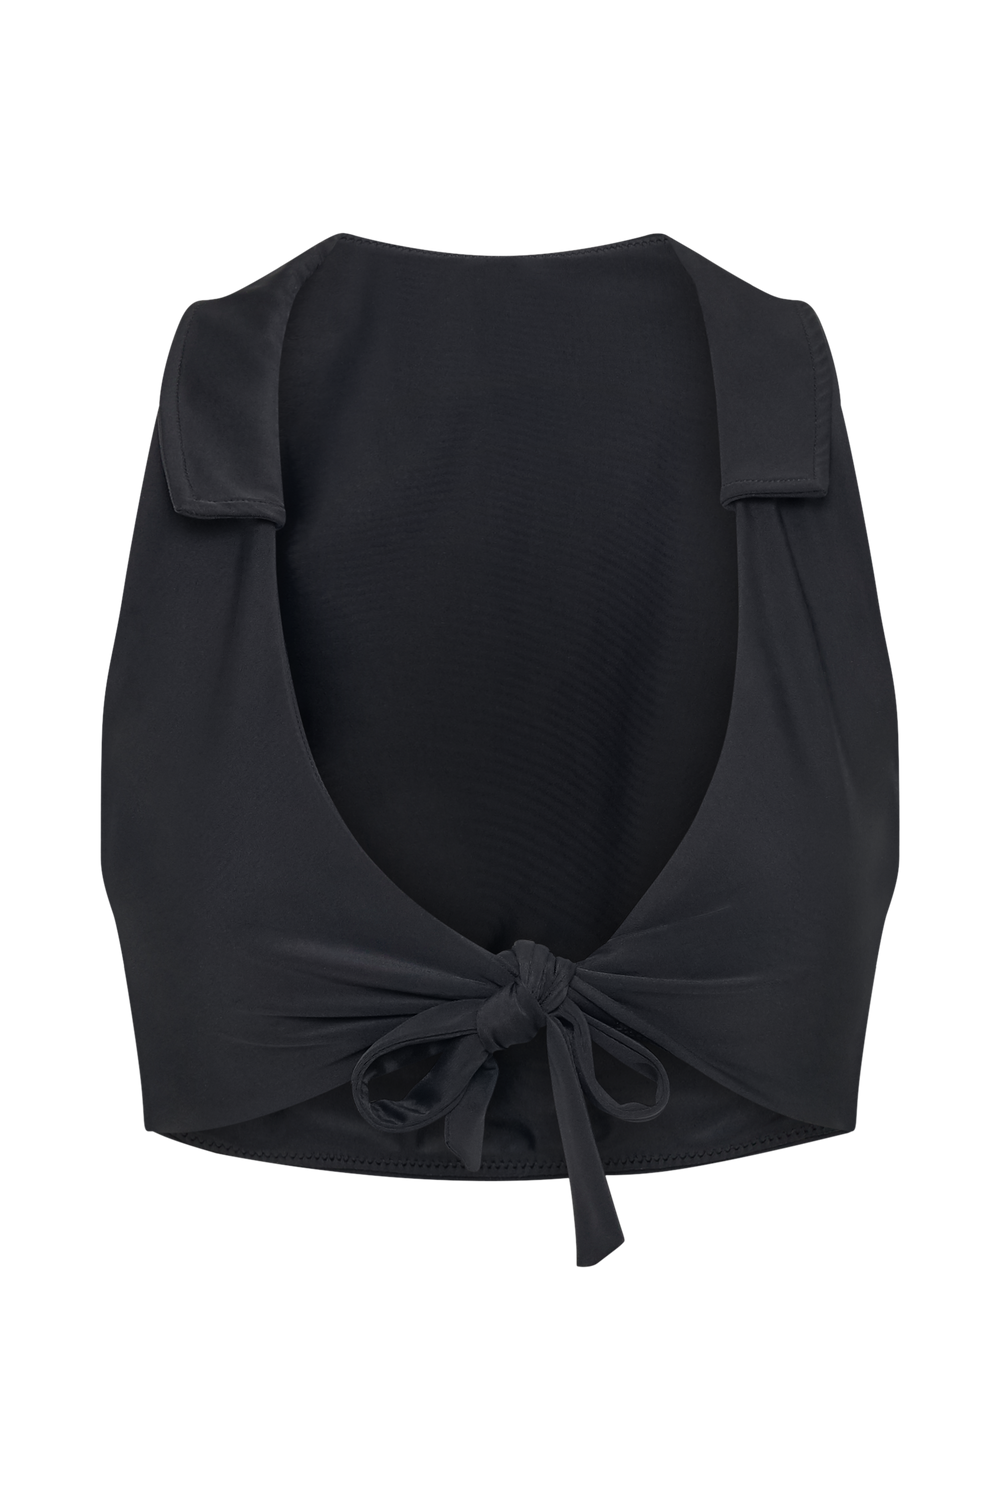 Clarita Recycled Tie Up Bikini Top - Black